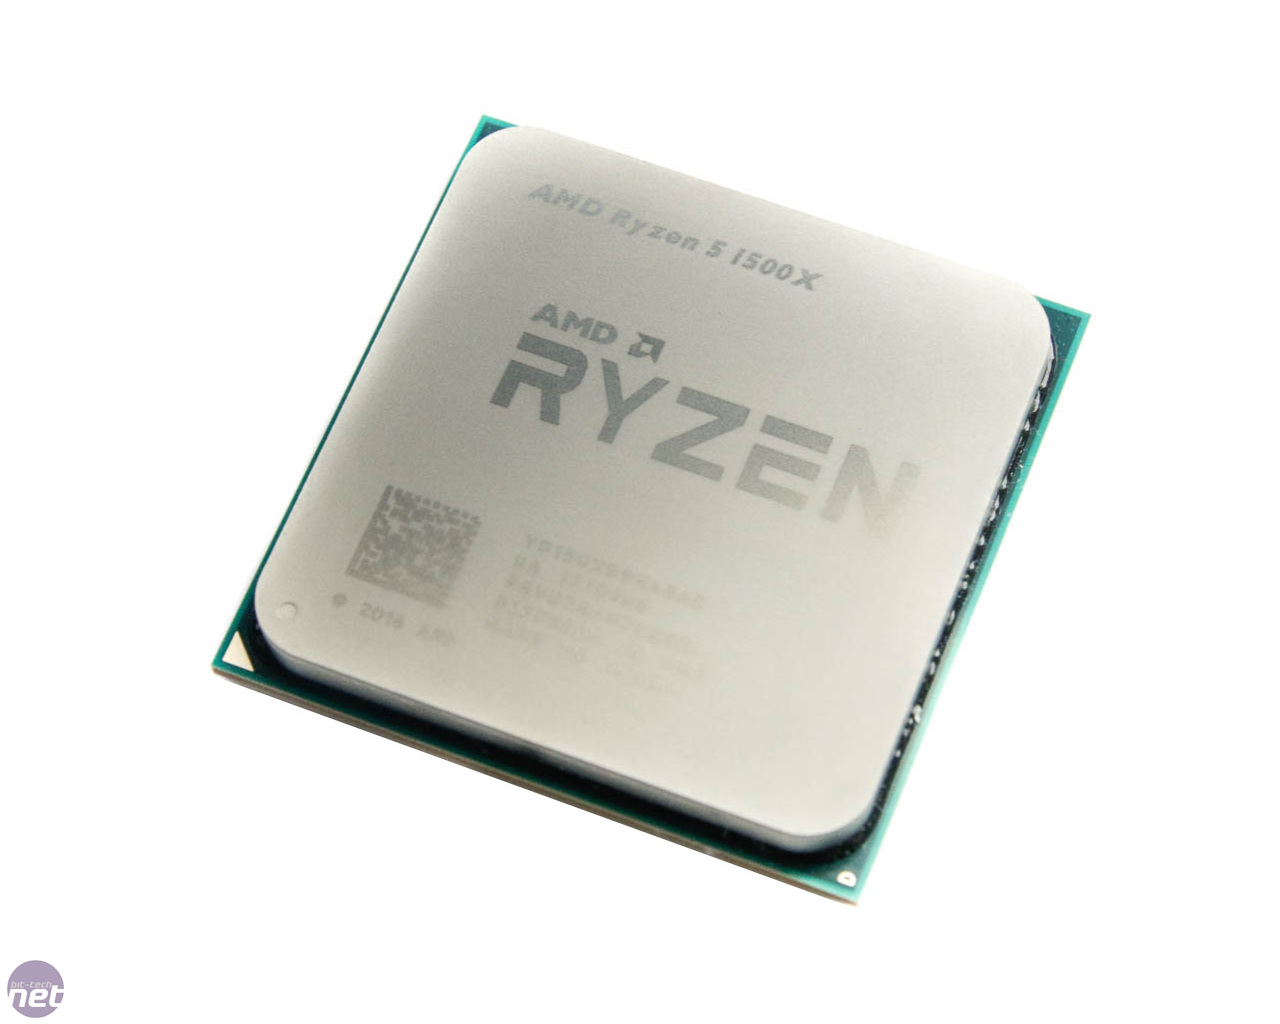 Amd ryzen 5 5500gt. Процессор AMD Ryzen 5 1500x (yd150xbbaebox). Процессор AMD am4 Ryzen 5 1500x. AMD Ryzen 5 1500x Quad-Core Processor 3.50. Процессор AMD Ryzen 5 1600 (6/12 Cores).